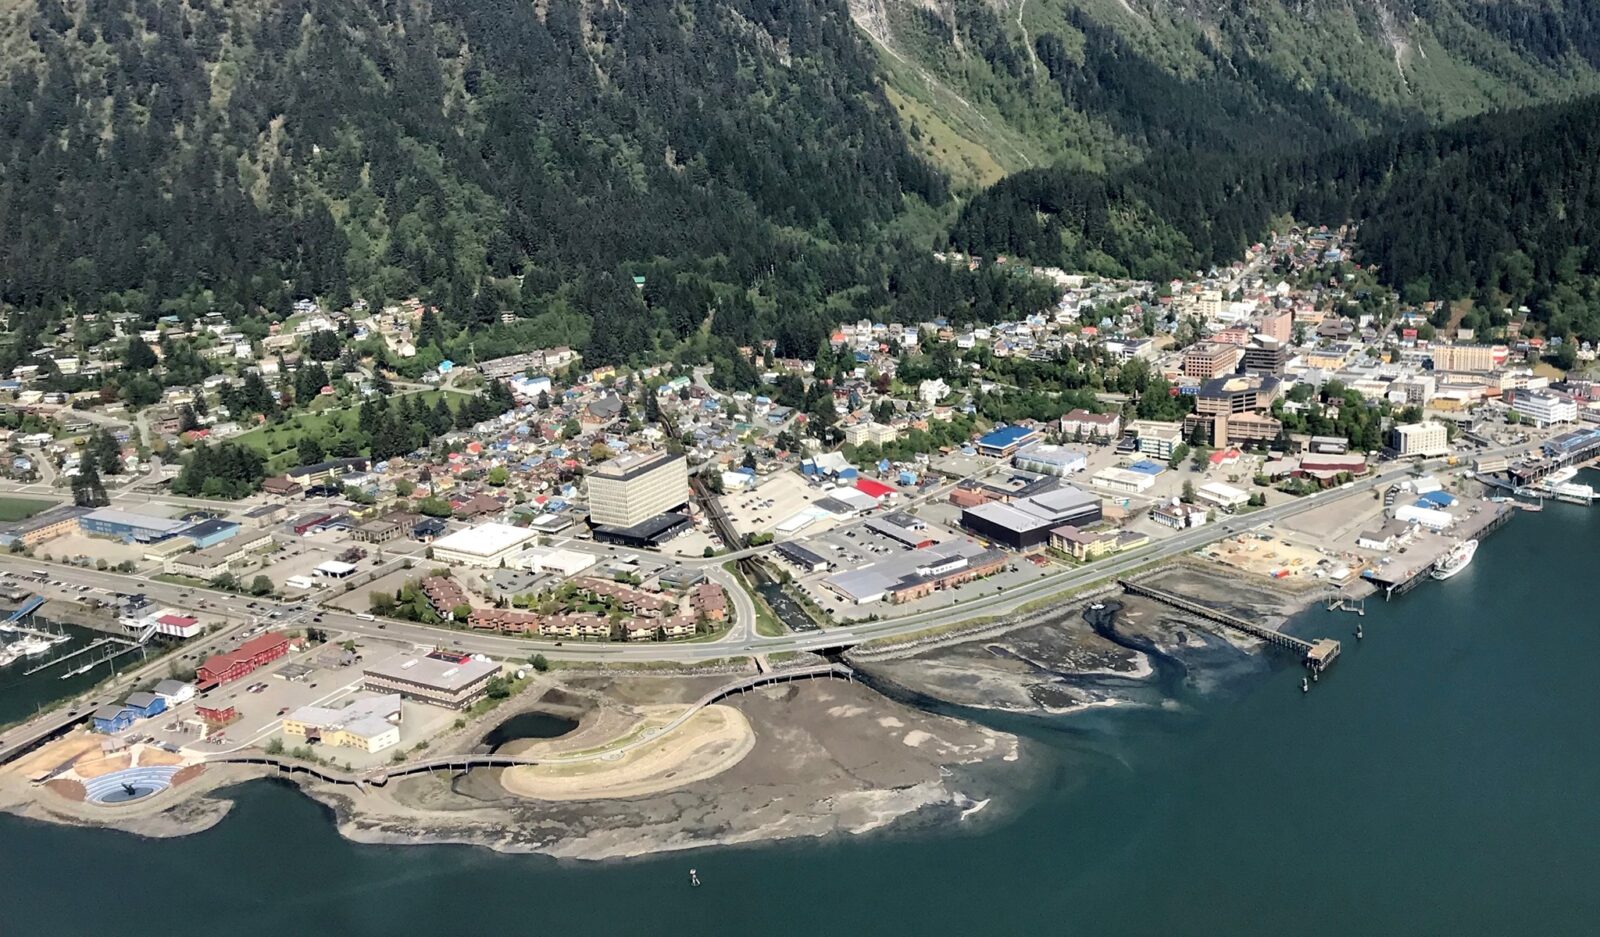 proHNS partners with AK DOT&PF on Juneau’s Egan Drive Improvements